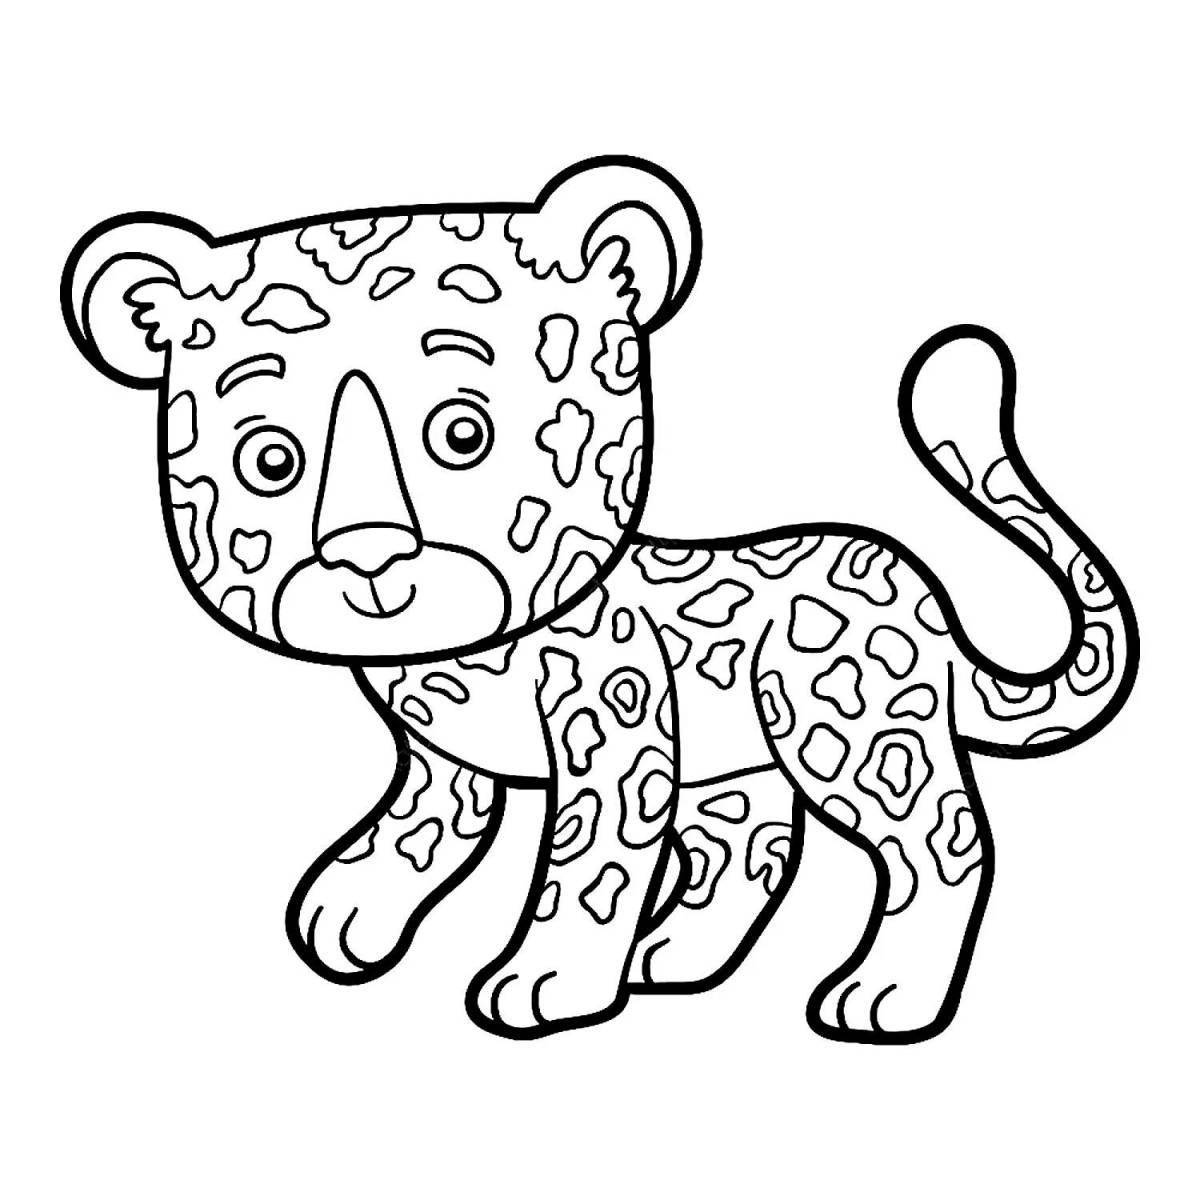 Coloring page gorgeous leopard